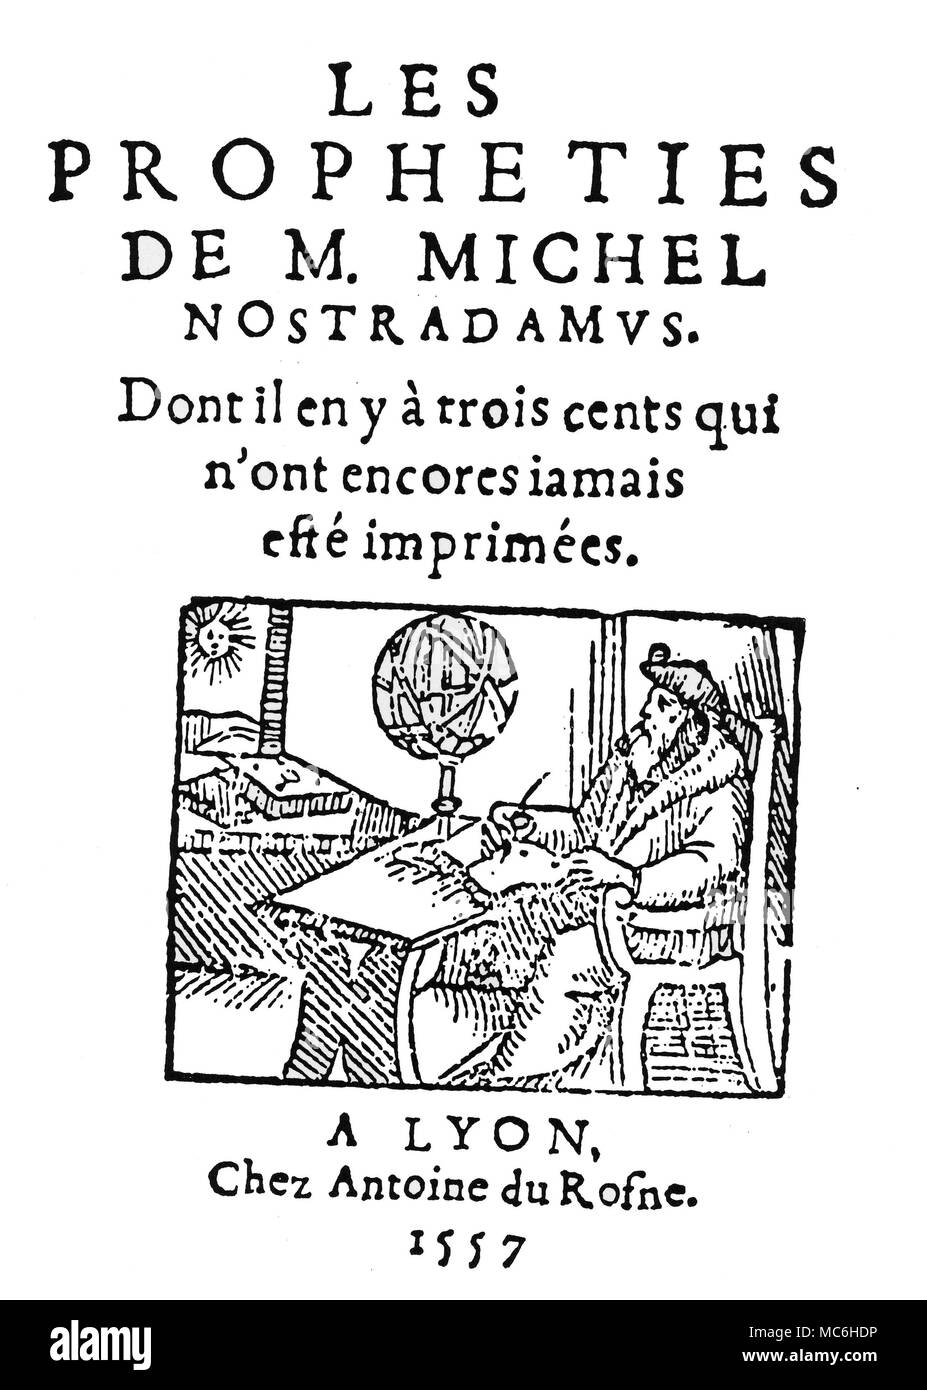 NOSTRADAMUS - TITLEPAGE Titlepage of Les Propheties de M. Michel Nostradamus - printed by Antoine du Rosne, at Lyon, 1557. Stock Photo